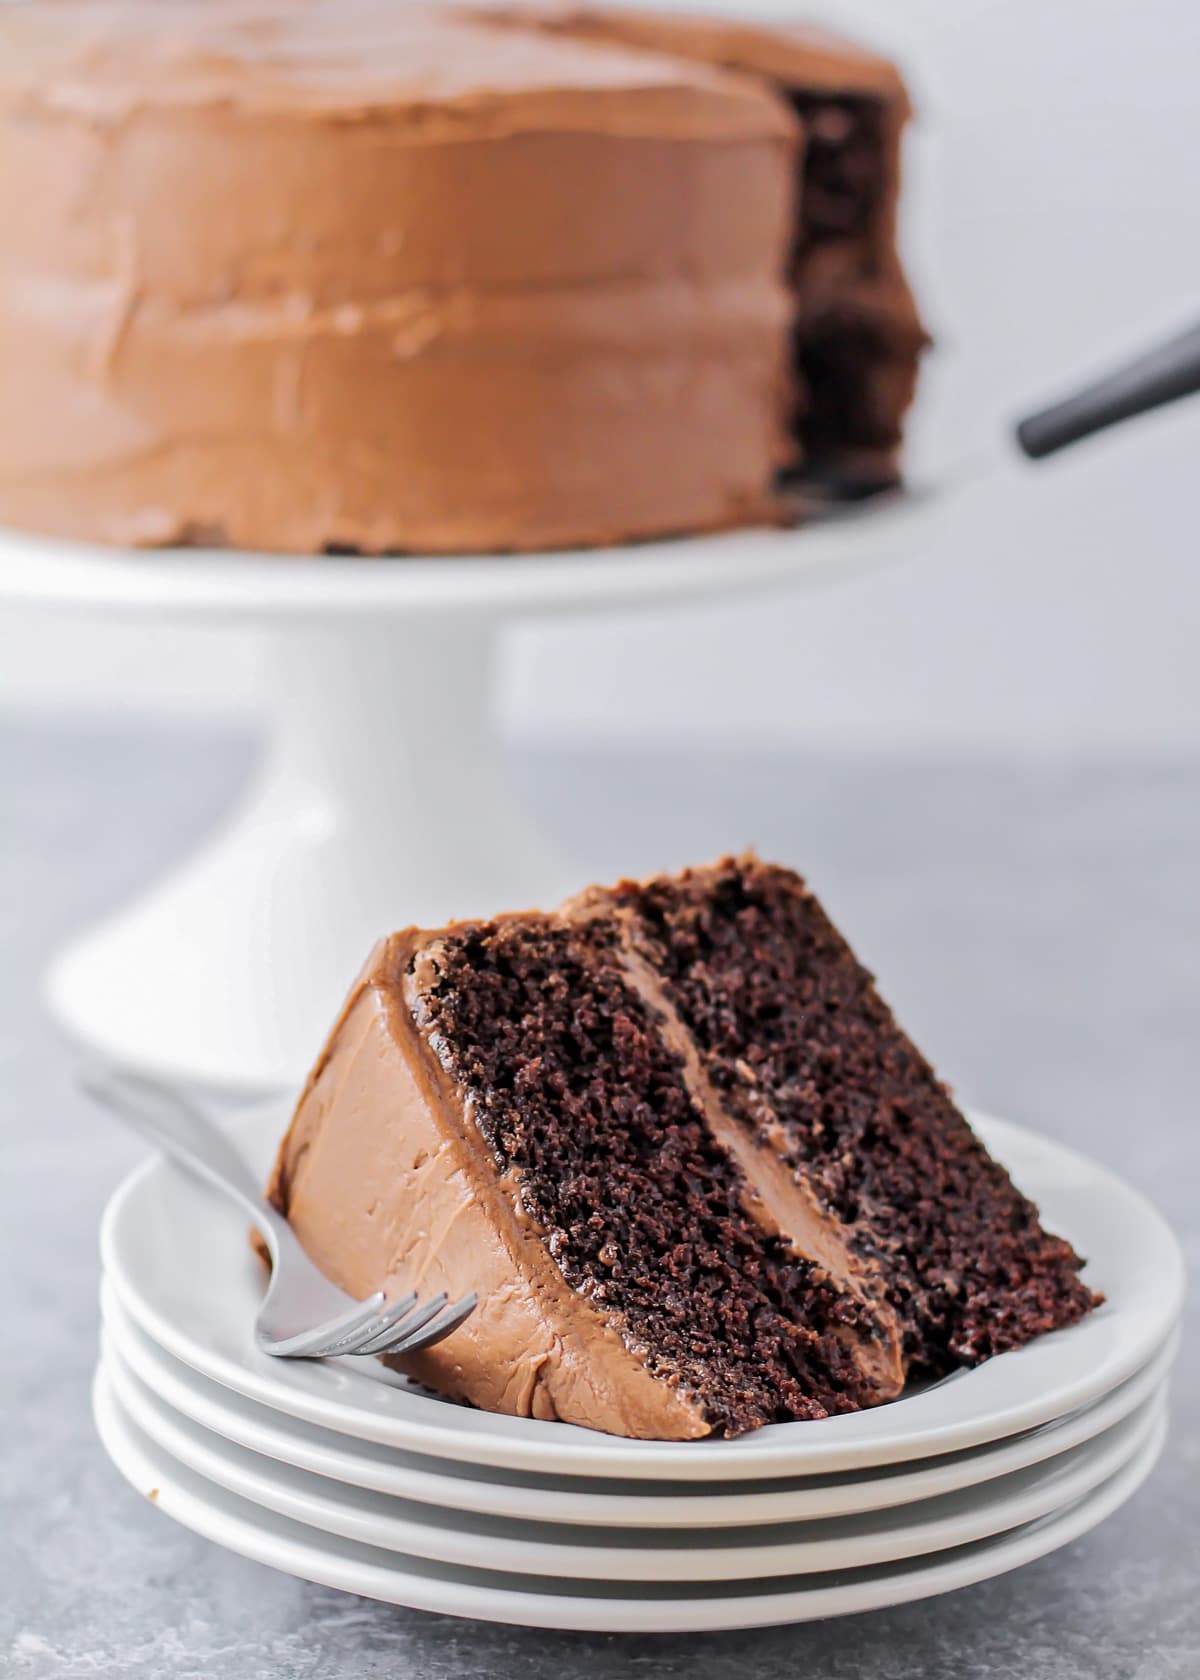 Easy chocolate cake slice close up image on plates.